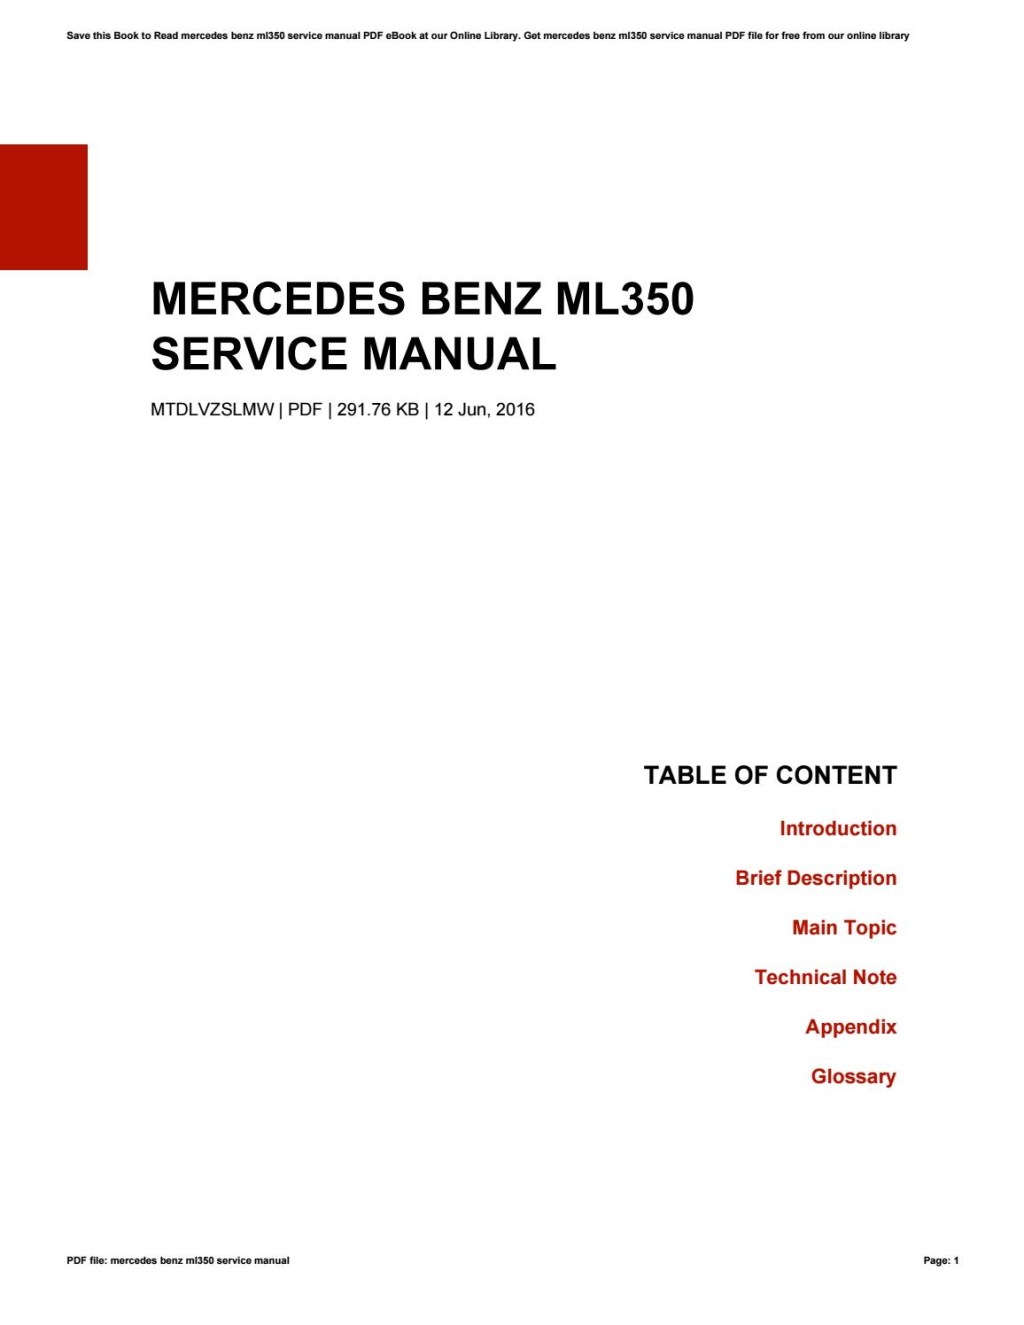 Picture of: Mercedes benz ml service manual by LarryHansen1 – Issuu